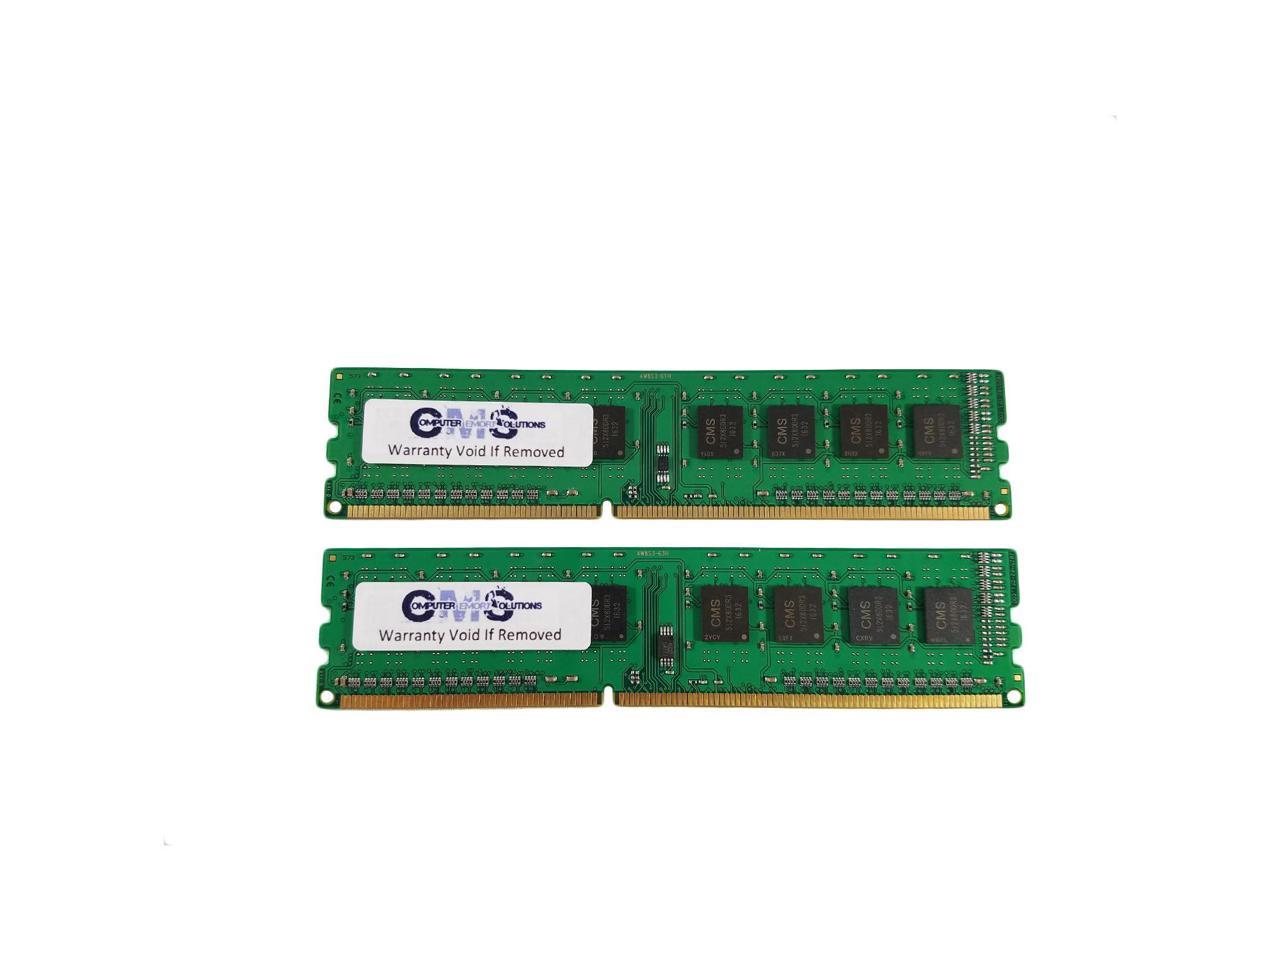 DDR3 1333 SODIMM PC3-10600 1.5V 204-Pin Memory Upgrade Module A-Tech 8GB RAM for HP Elite 8200 Ultra-Slim 